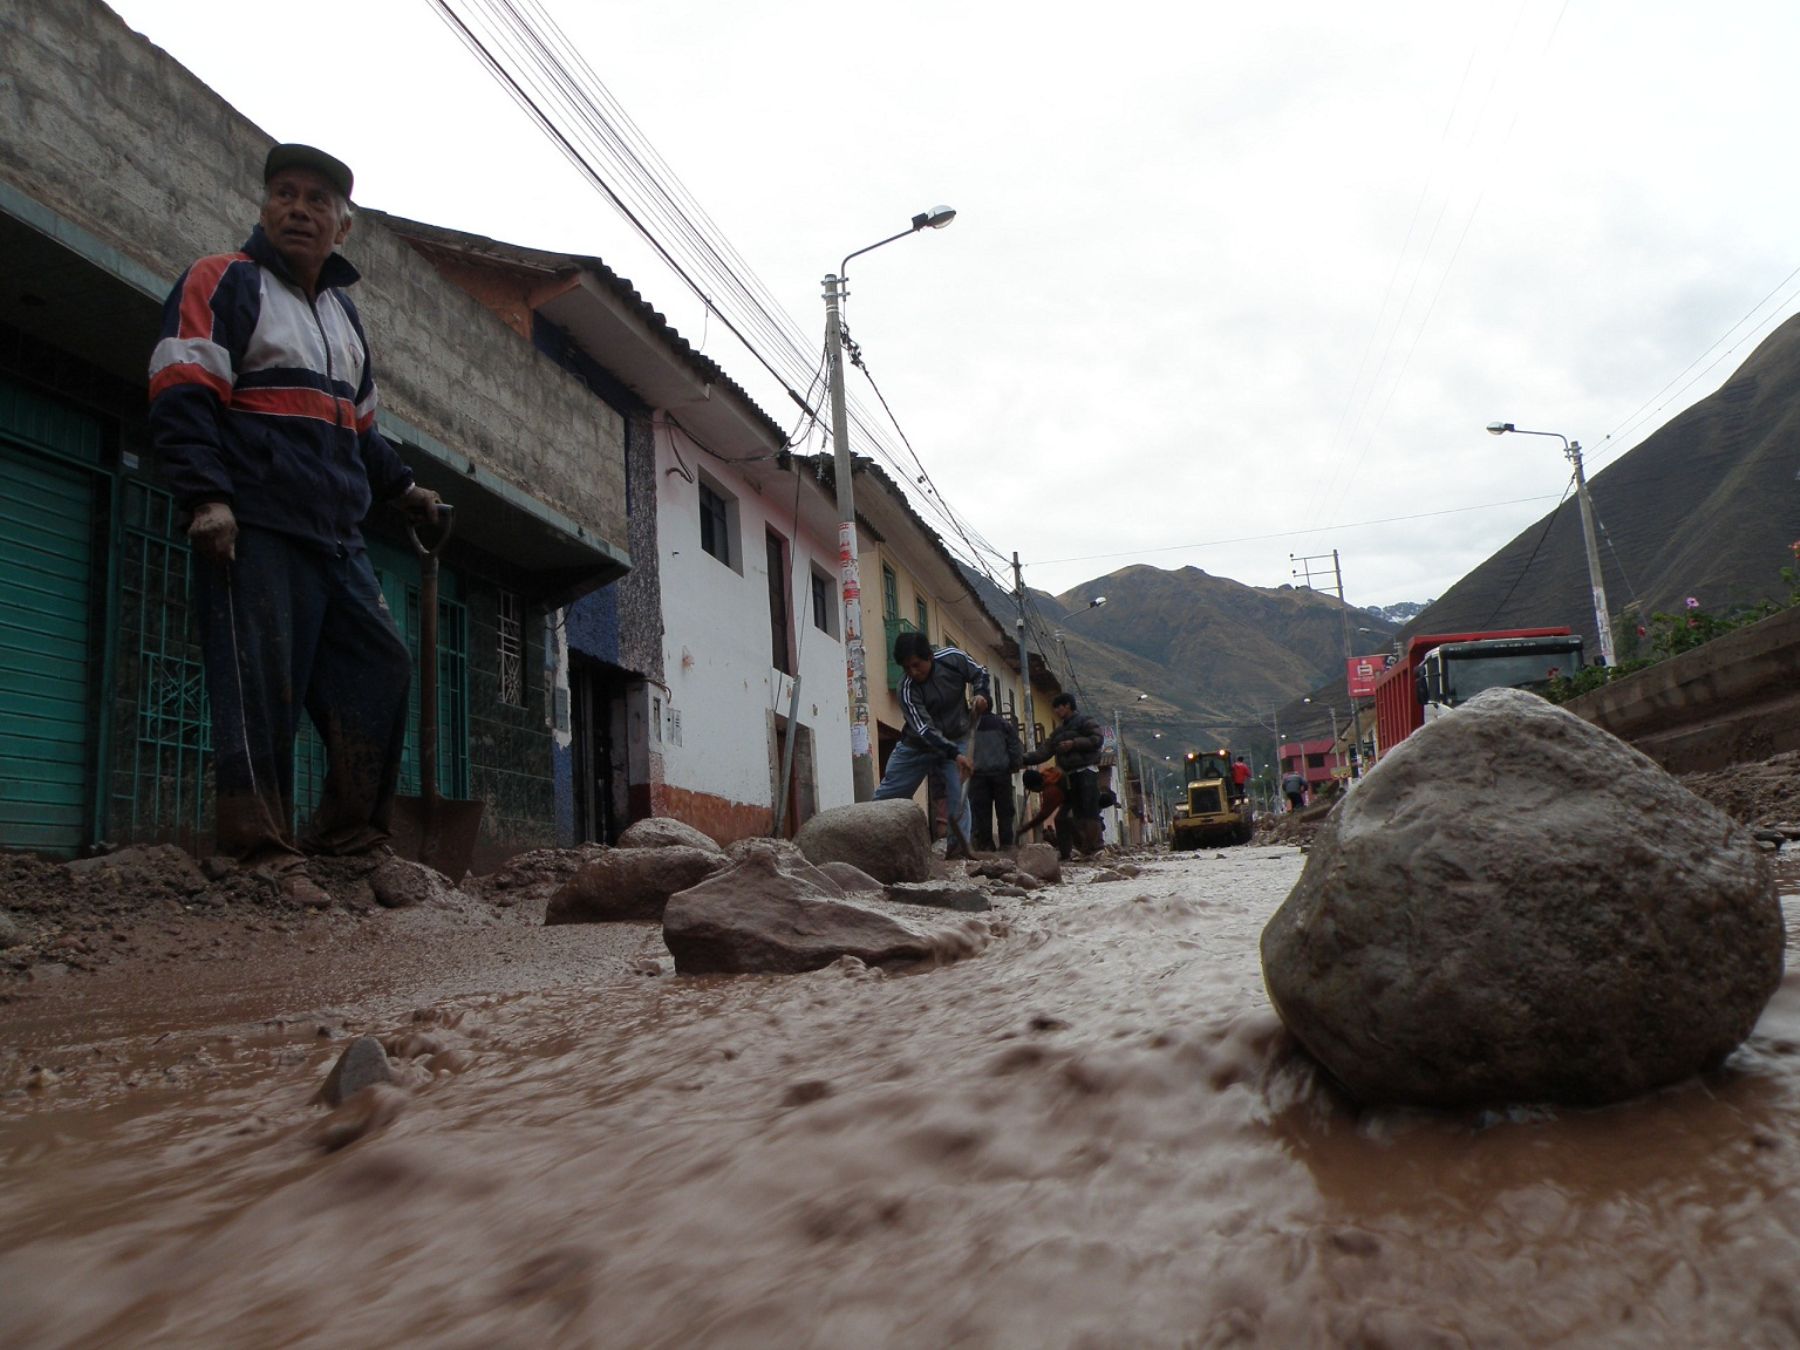 Lluvias intensas se adelantaron en zonas altas de Cusco, advierte Senamhi |  Noticias | Agencia Peruana de Noticias Andina